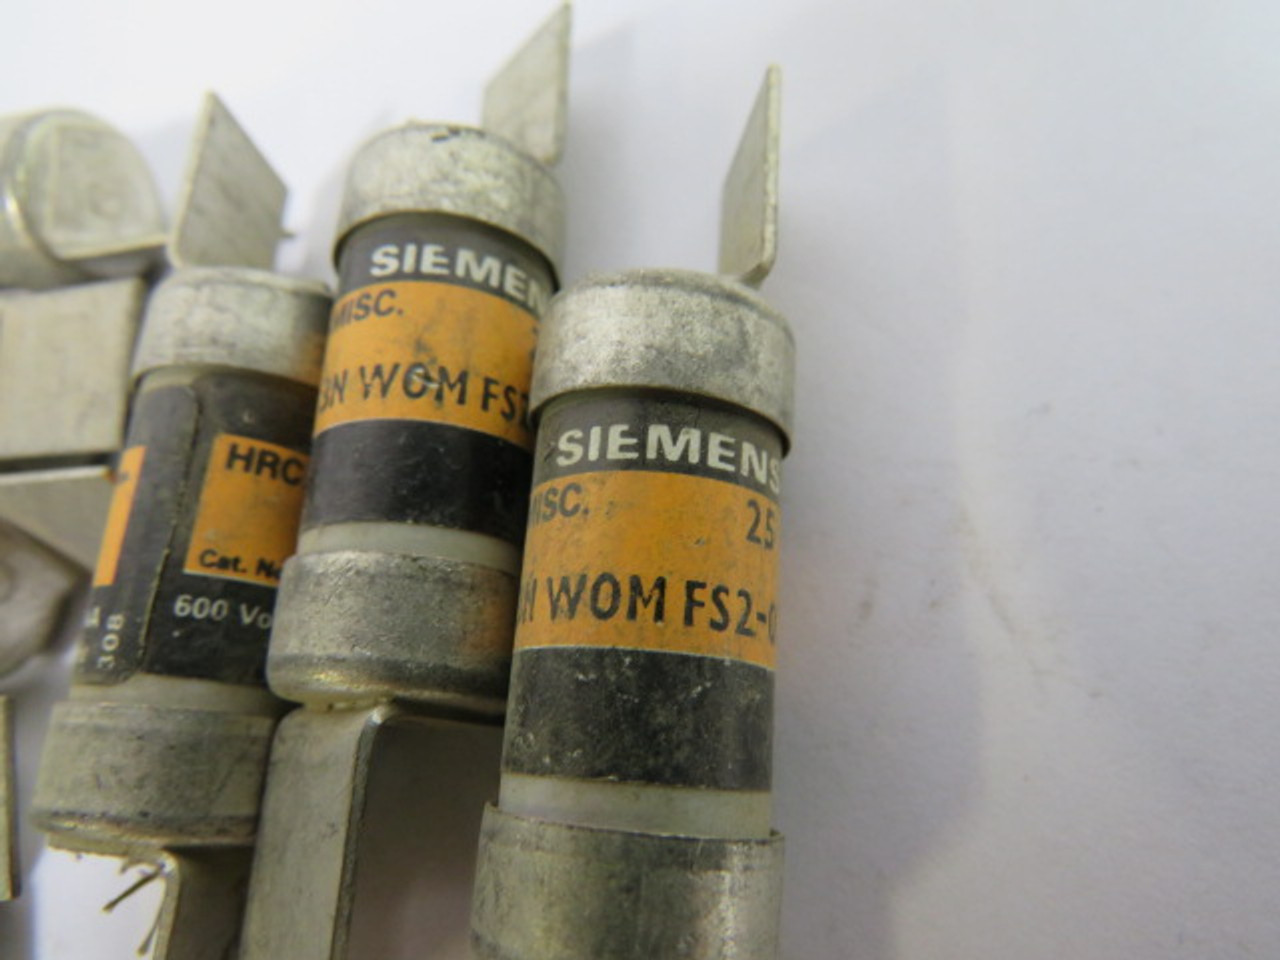 Siemens 3N-WOMFS2-025 Fuse 25A 600V Lot of 10 USED